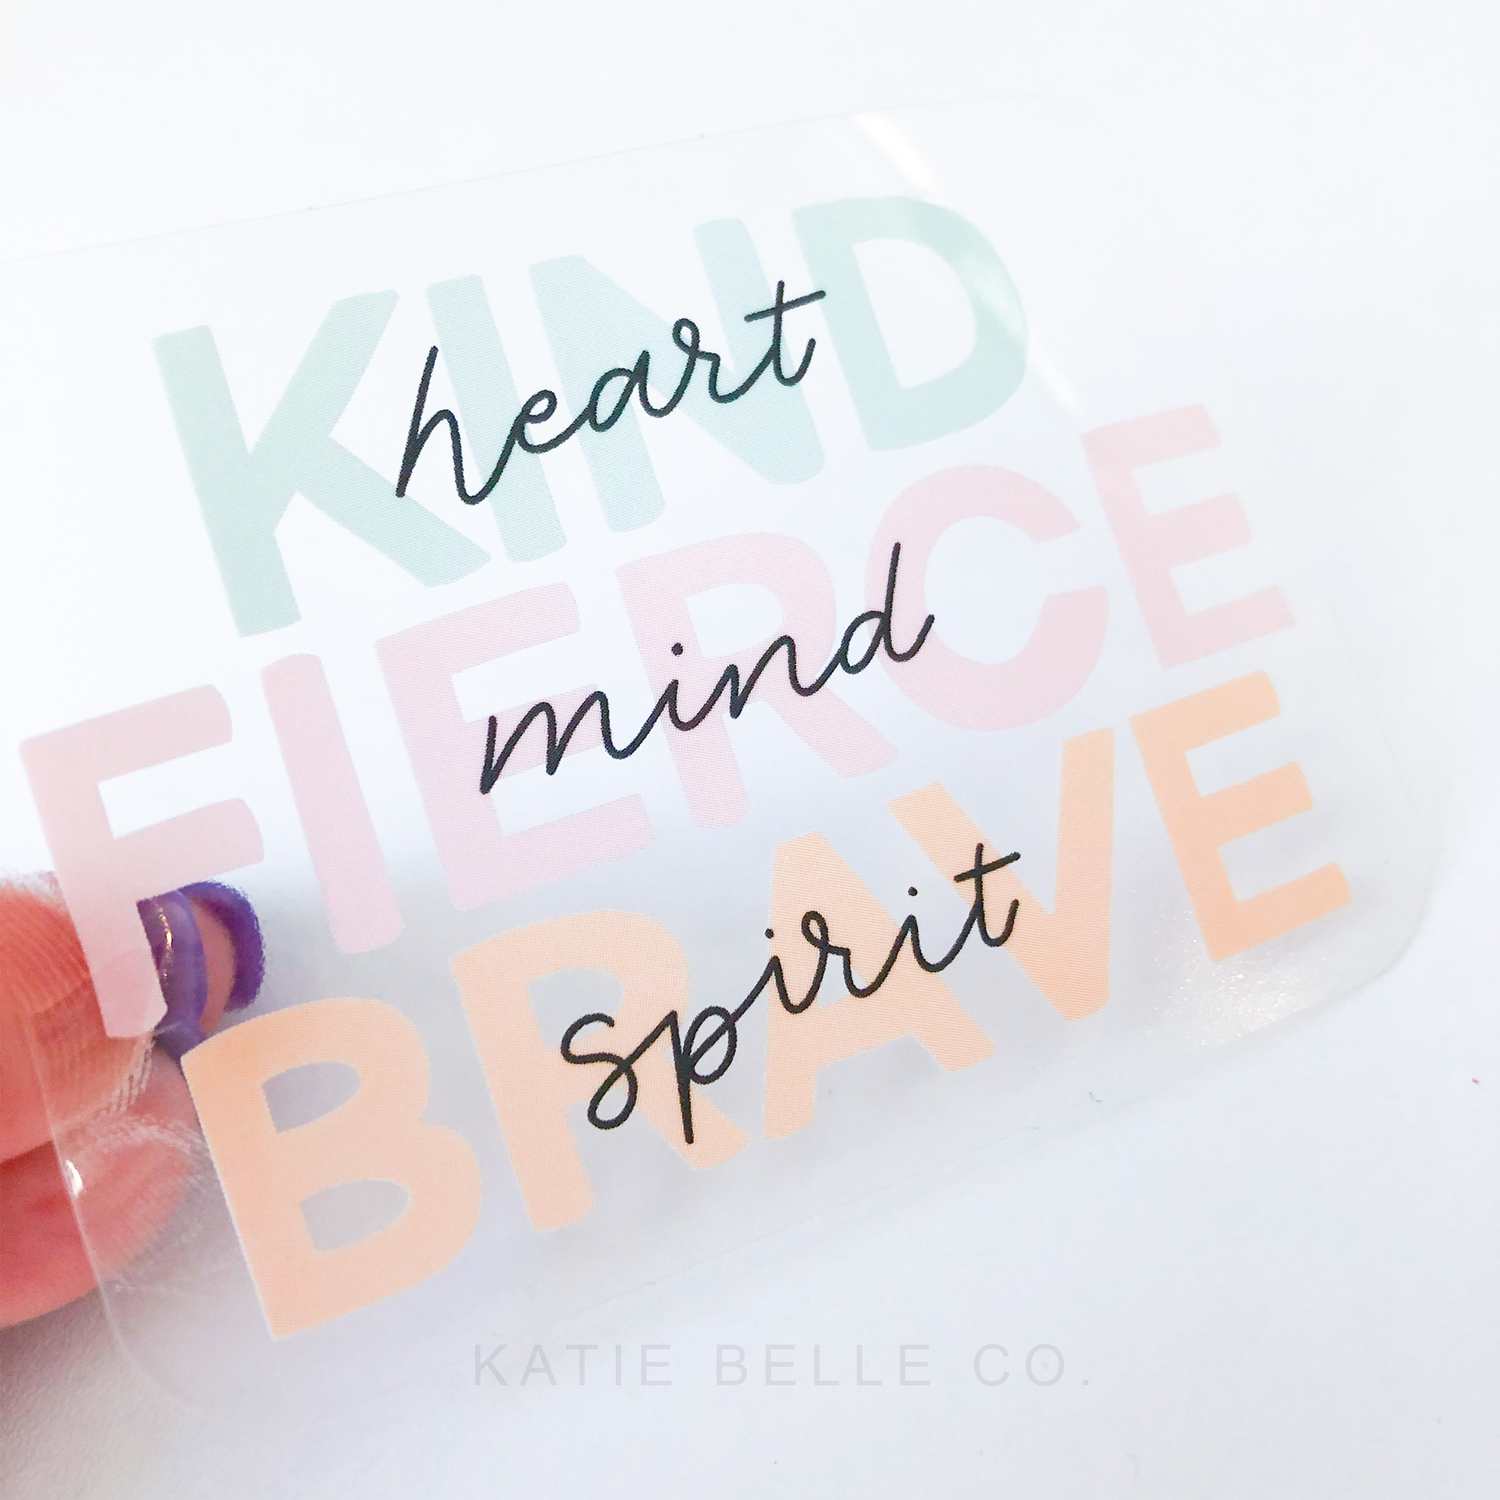 kind heart, fierce mind, brave spirit. vinyl sticker. clear vinyl sticker. waterproof sticker. laptop sticker. rectangle sticker. pastel colors. Katie Belle Co.